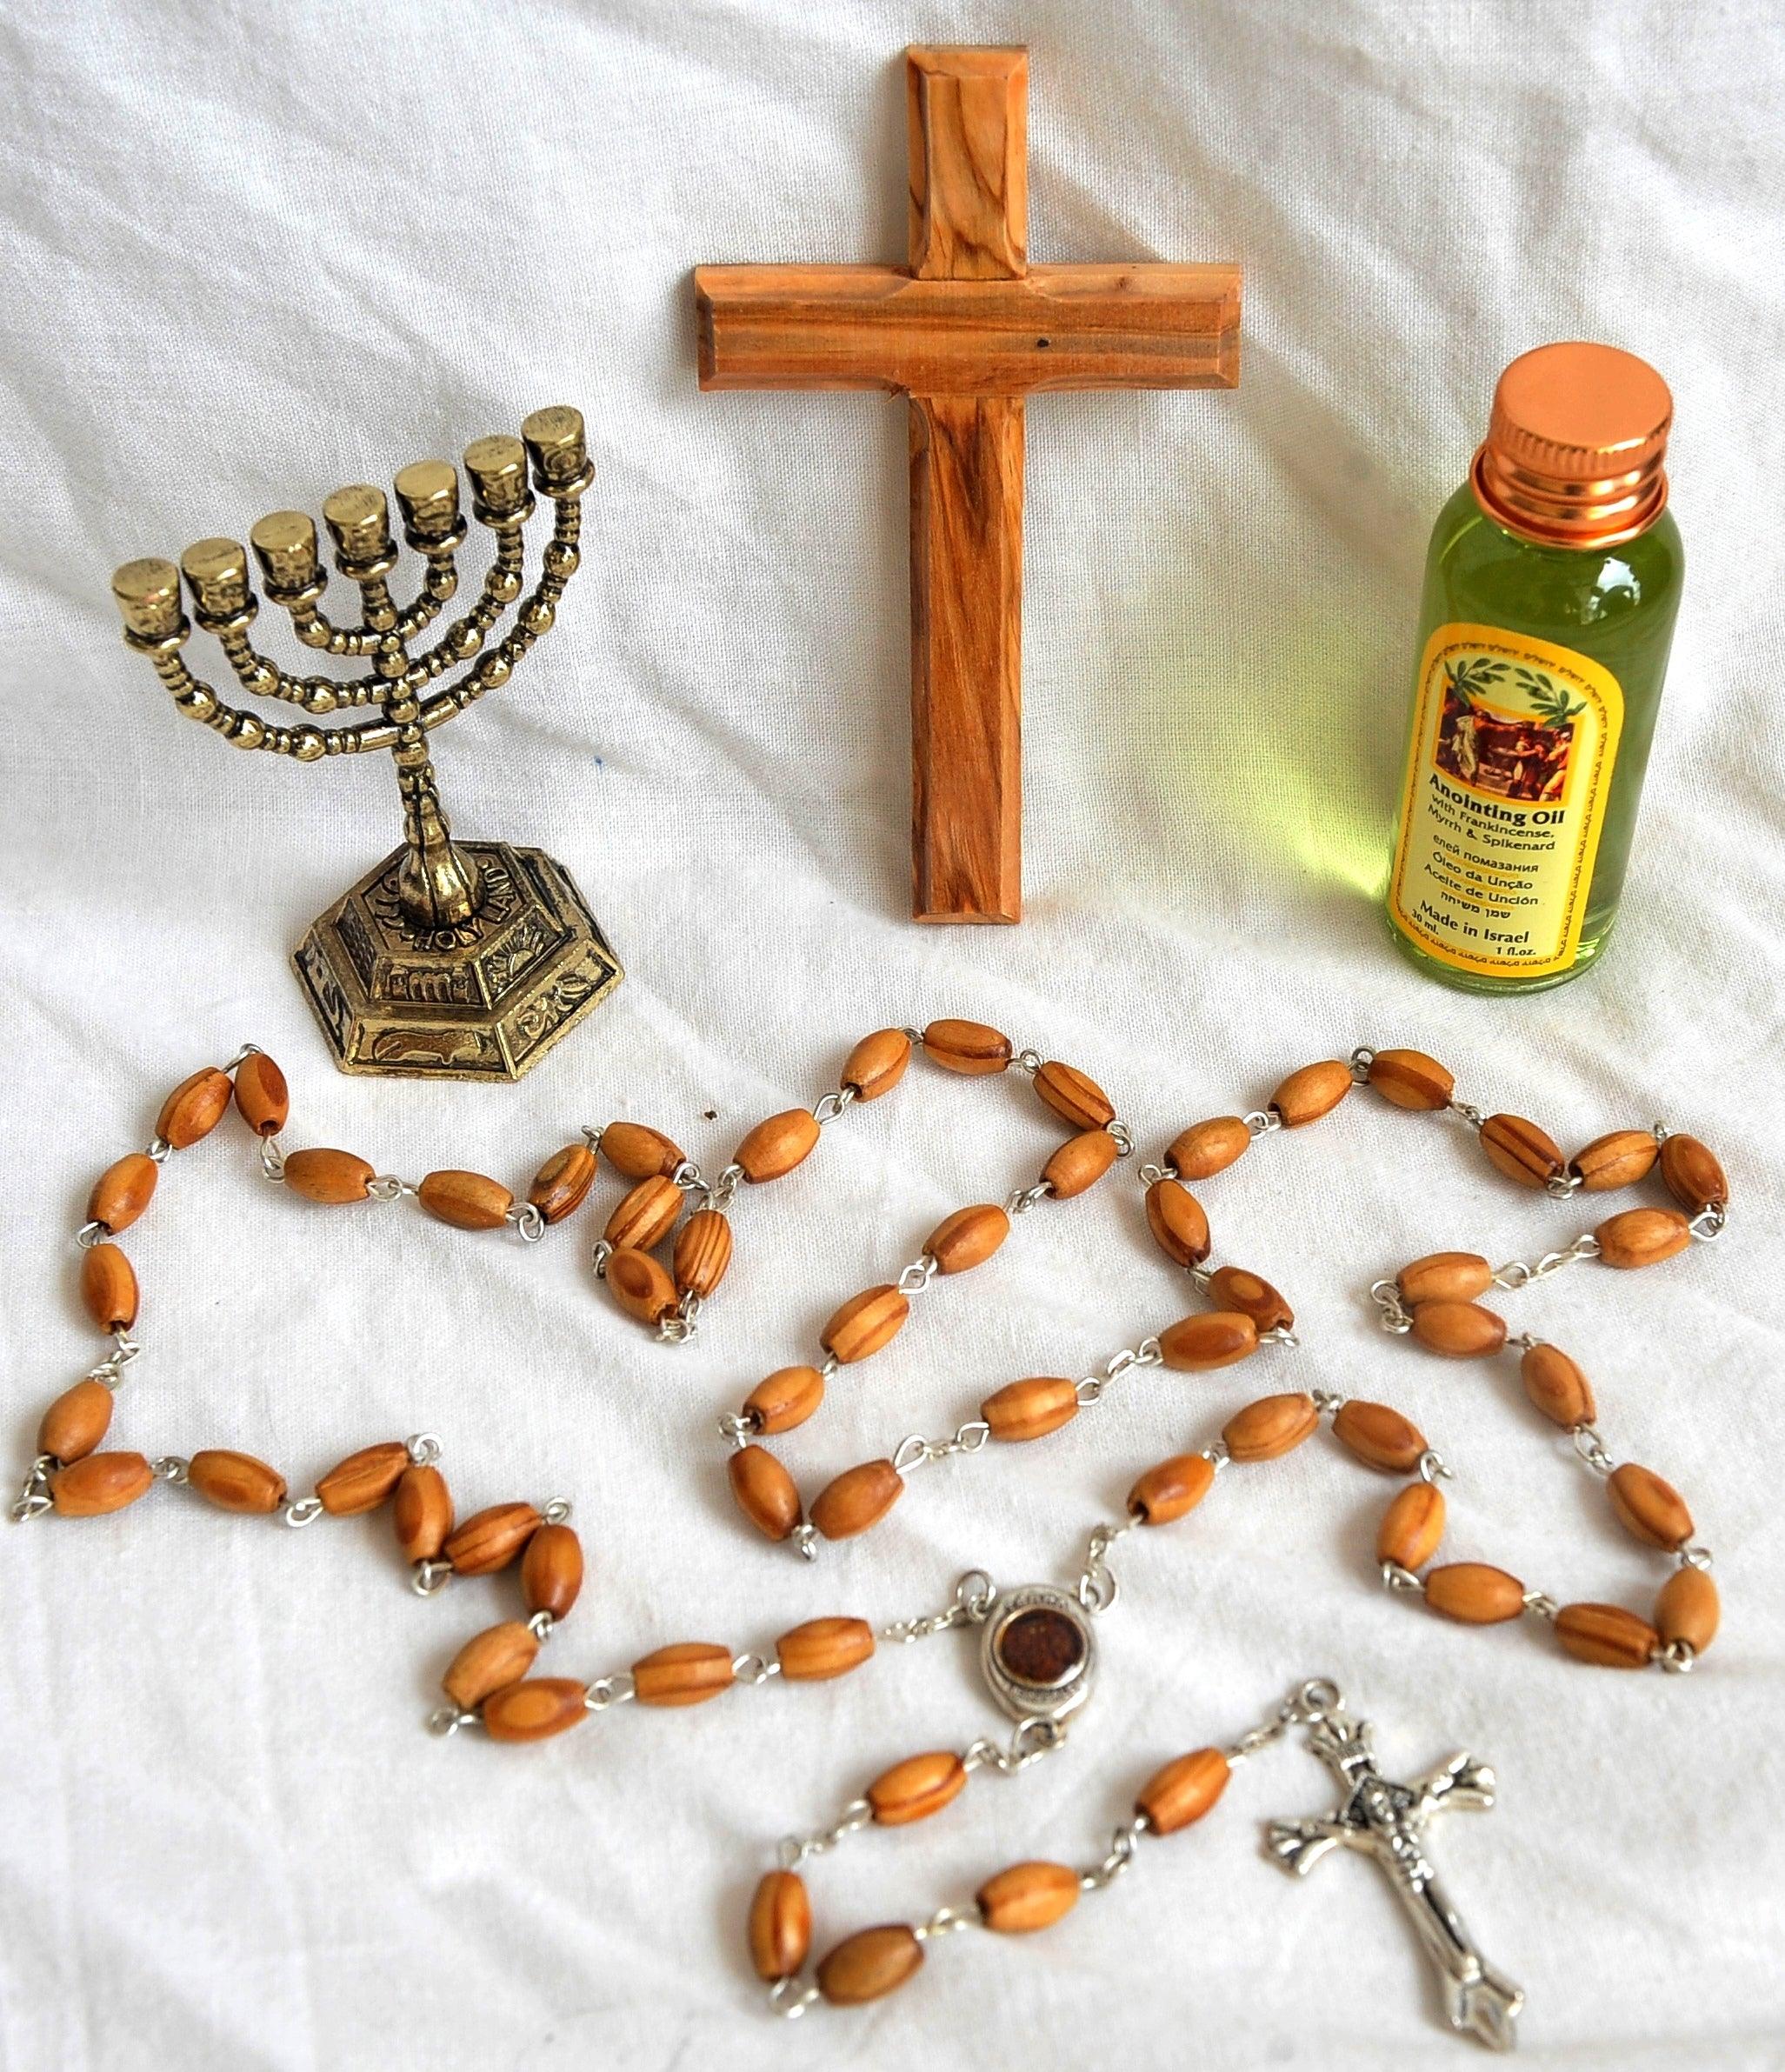 Holy Anointing Oil 'Frankincense & Myrrh' from Israel - 30ml